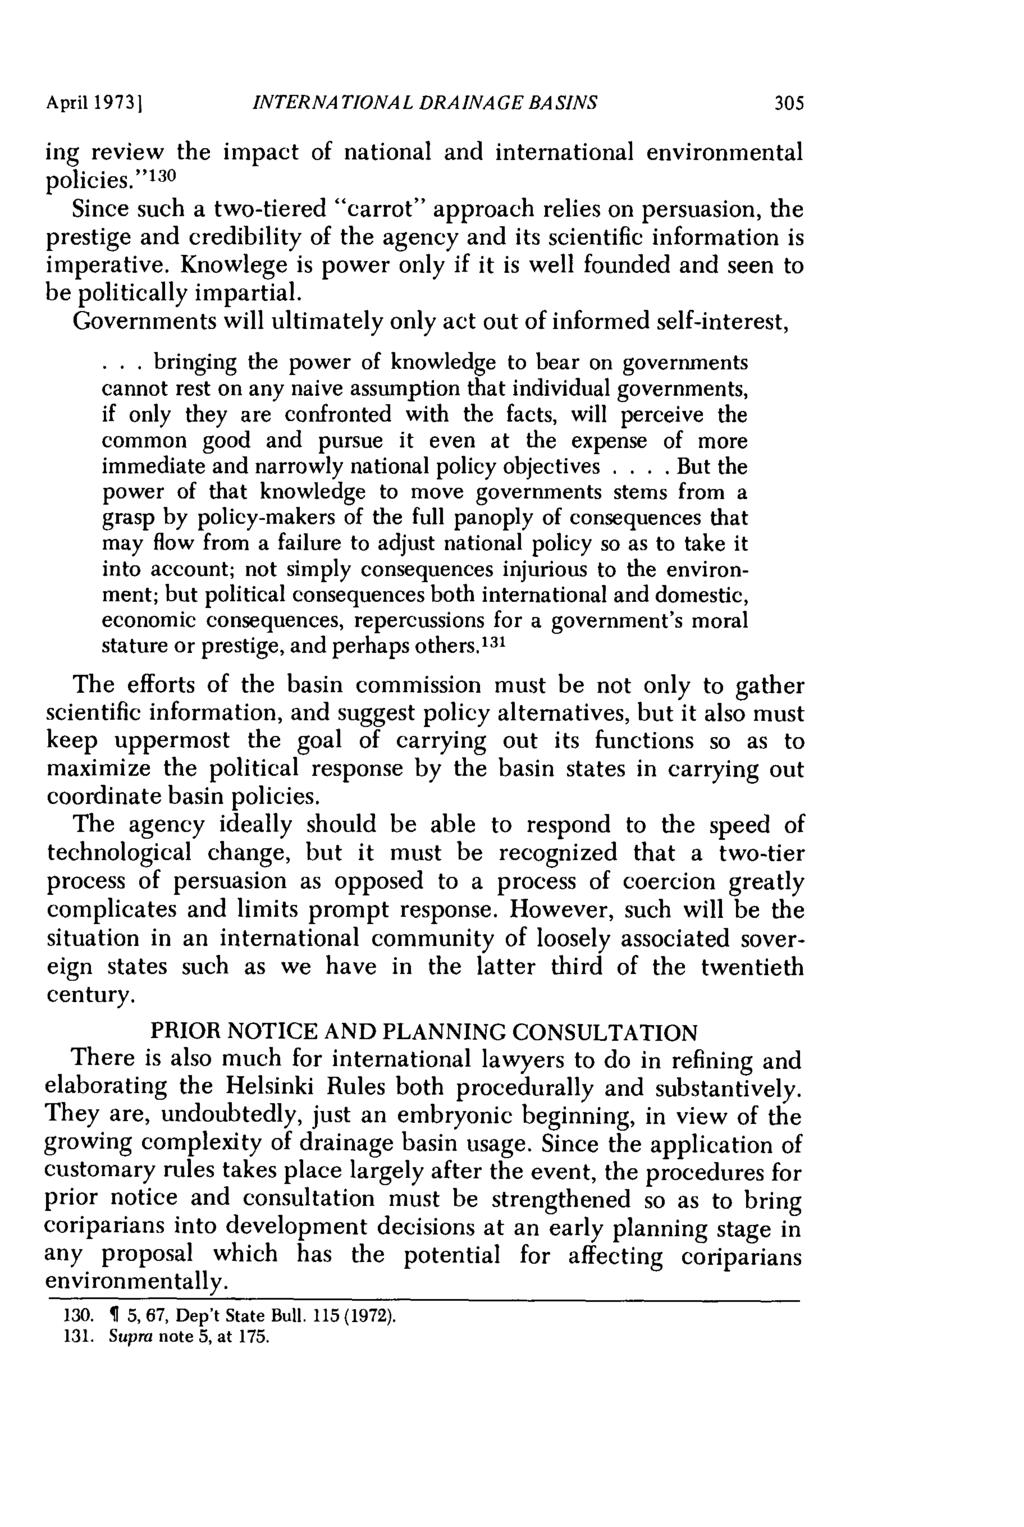 April 19731 INTERNATIONAL DRAINAGE BA SINS ing review the impact of national and international environmental policies.